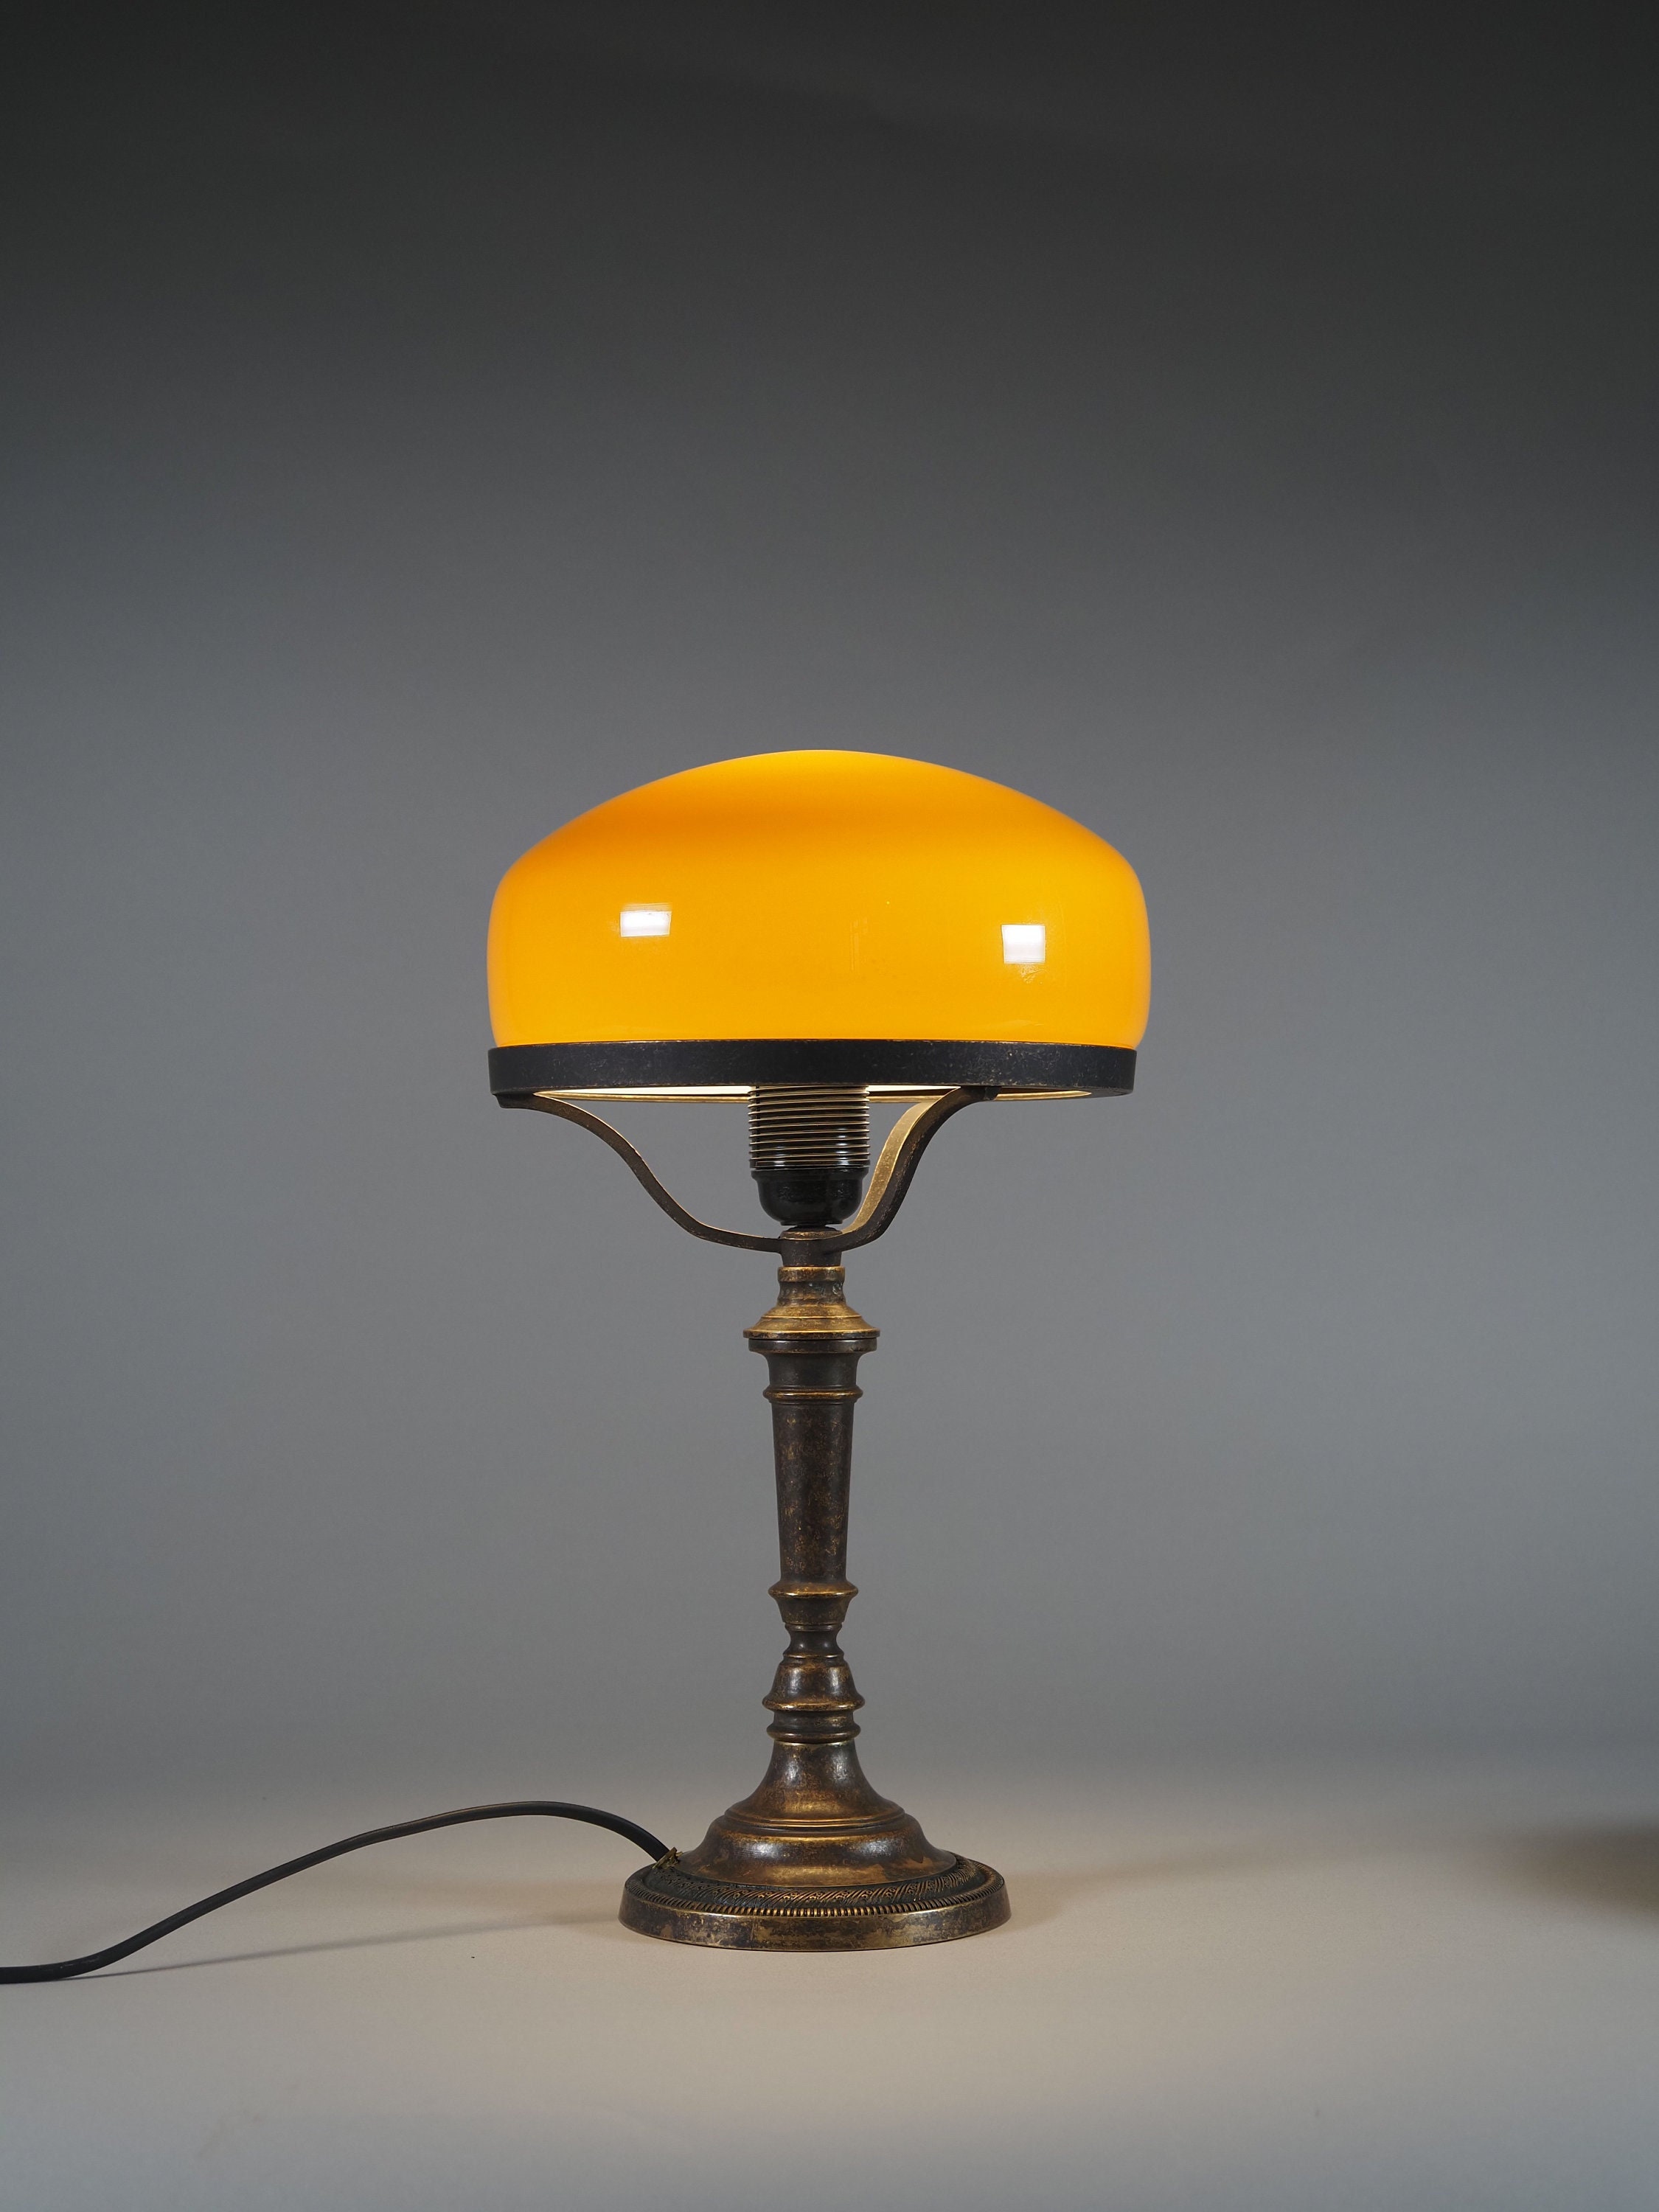 Cordless Banker Desk Lamp,rechargeable Library Desk Lamp,battery Green  Powered Lamp,portable Glass Bedside Desk Lamp 